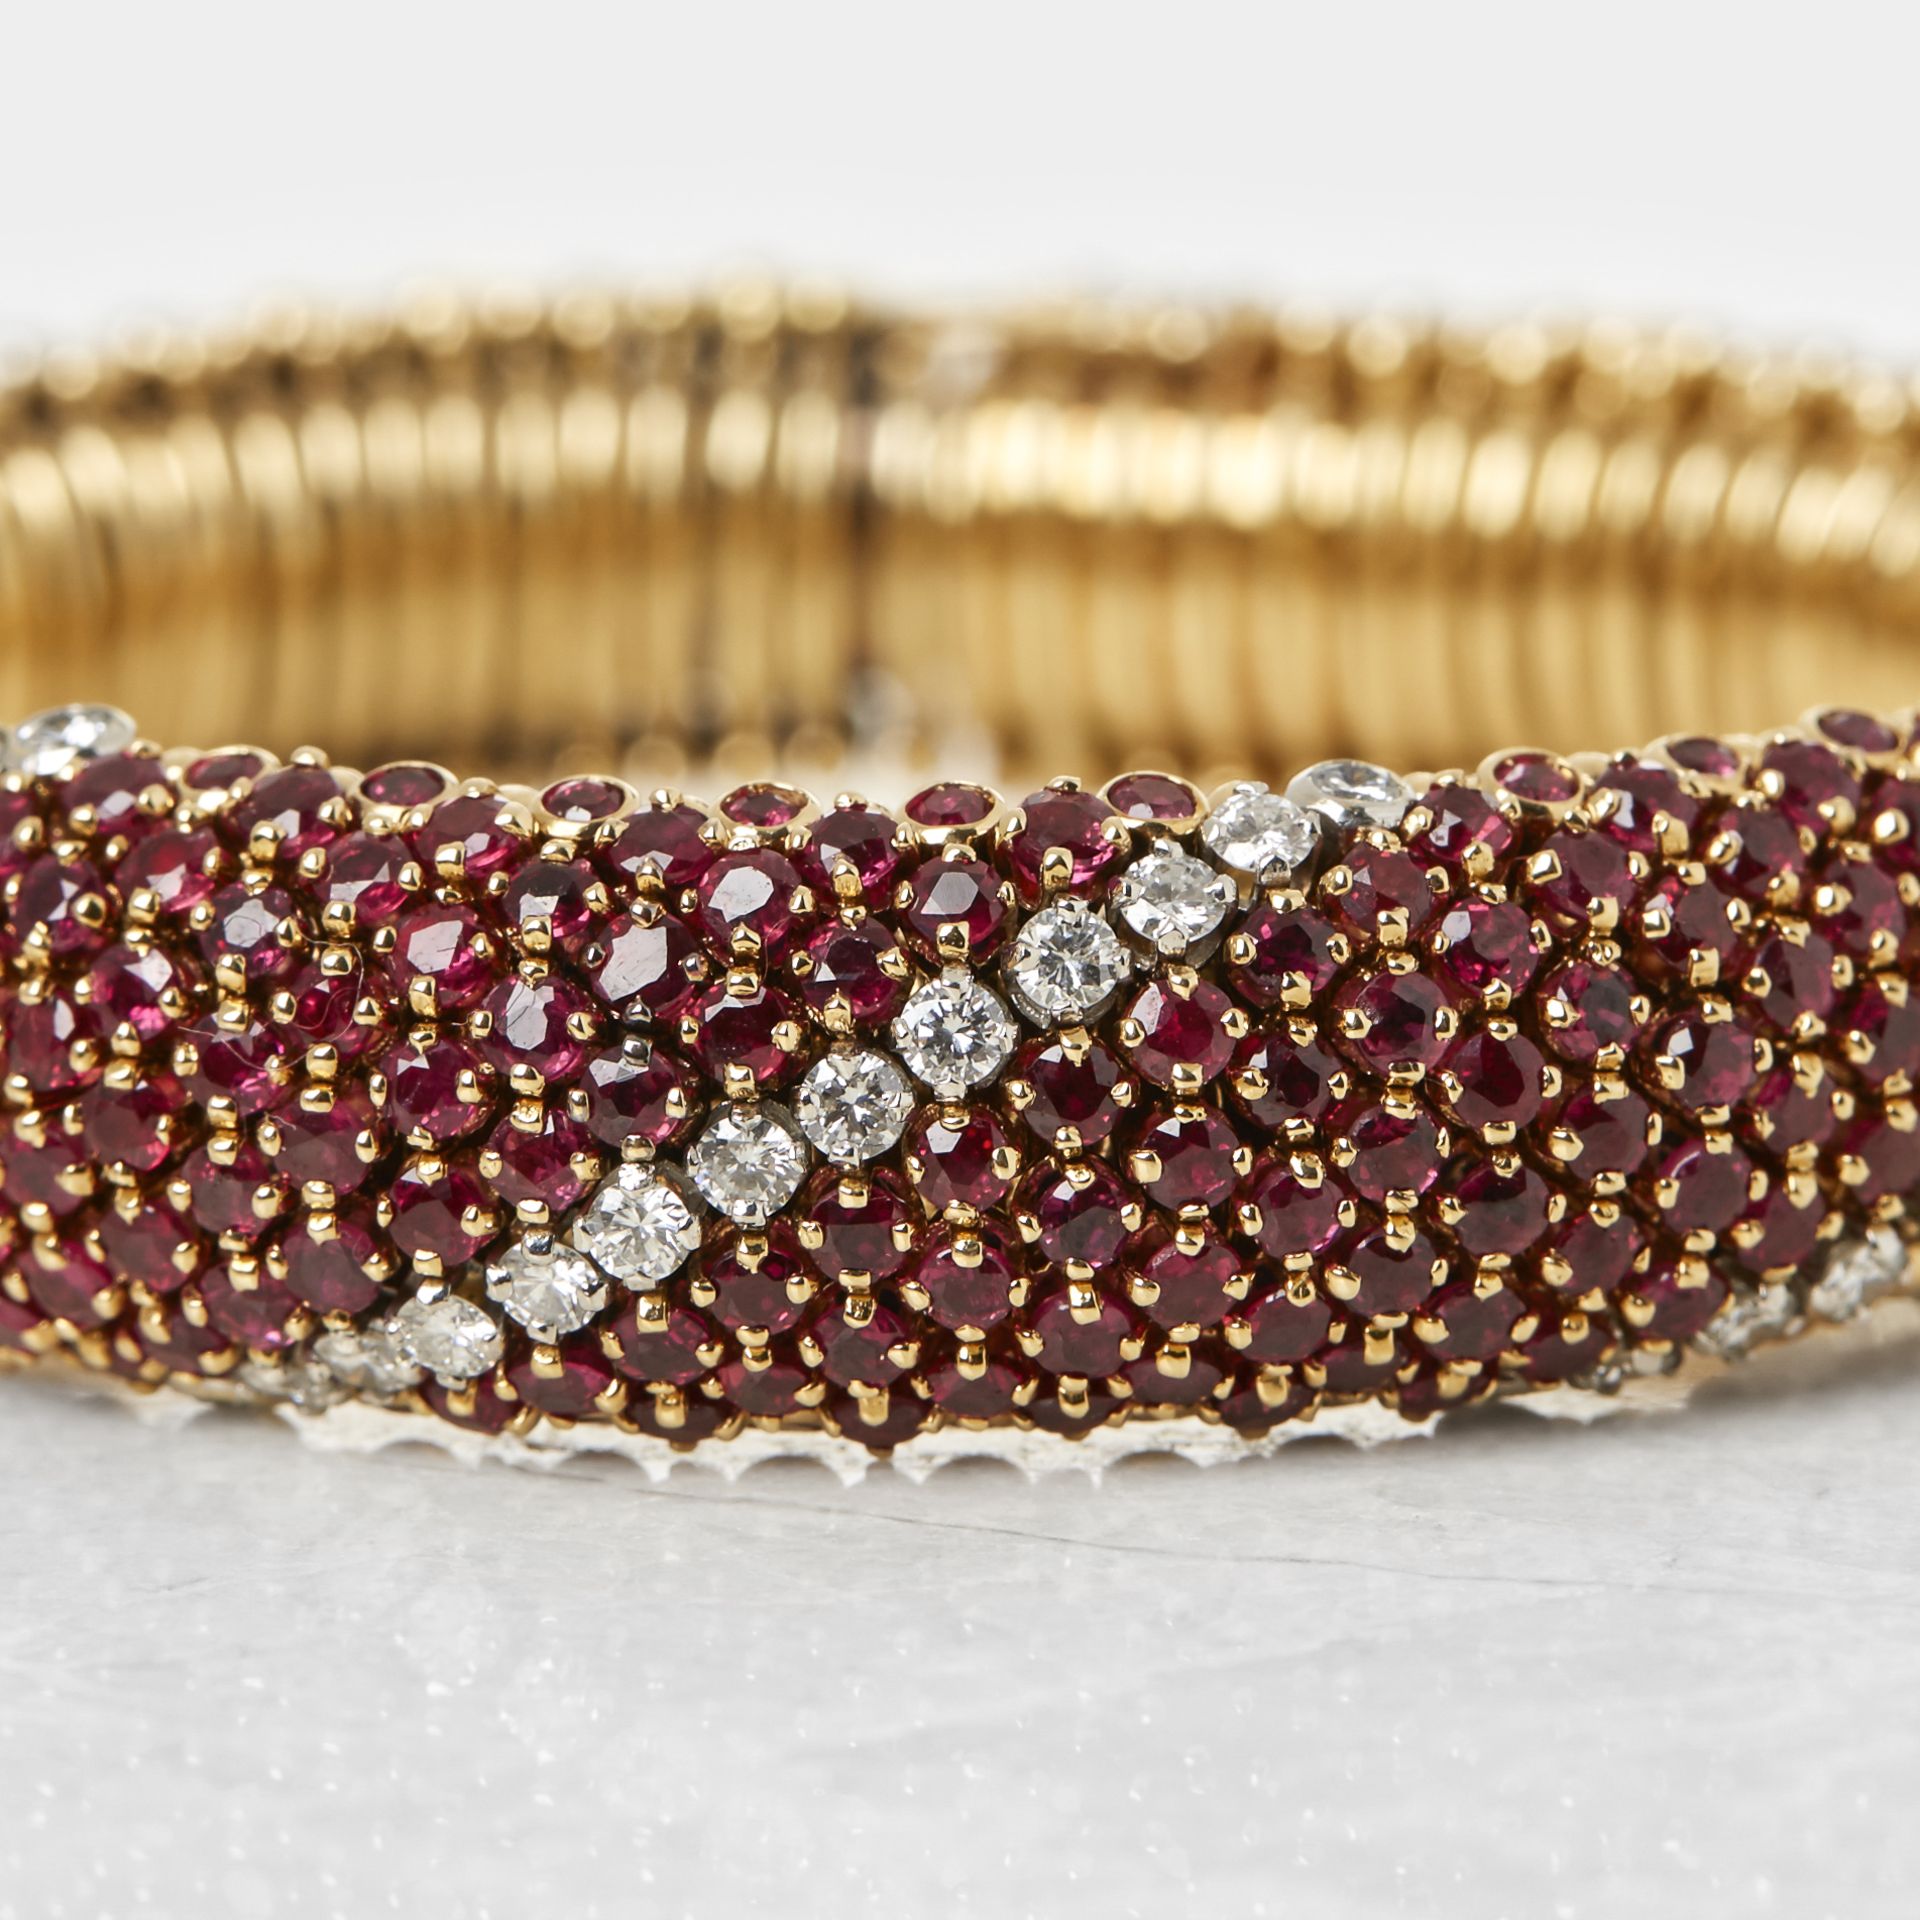 Van Cleef & Arpels 18k Yellow Gold Ruby & Diamond Vintage Bracelet with Presentation Box - Image 7 of 16